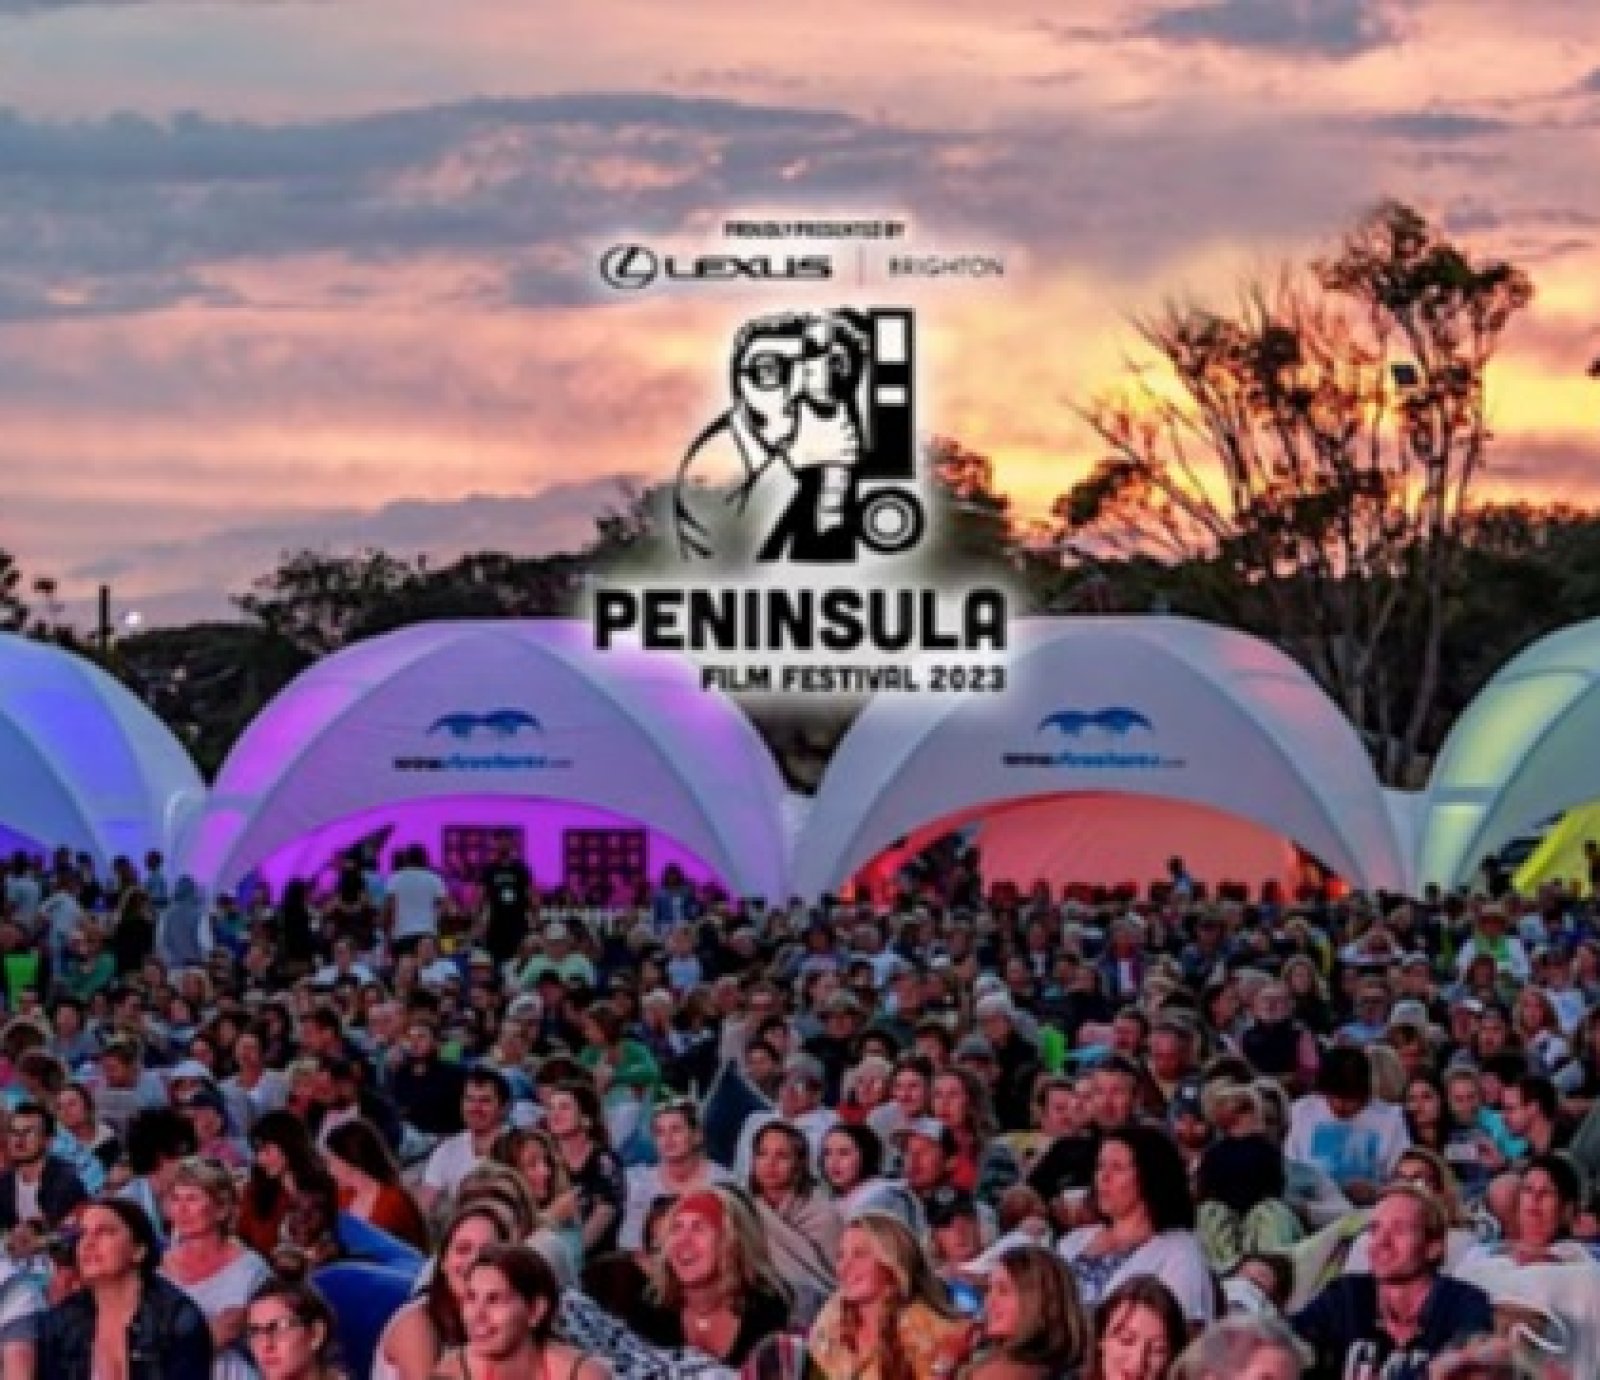 Peninsula Film Festival